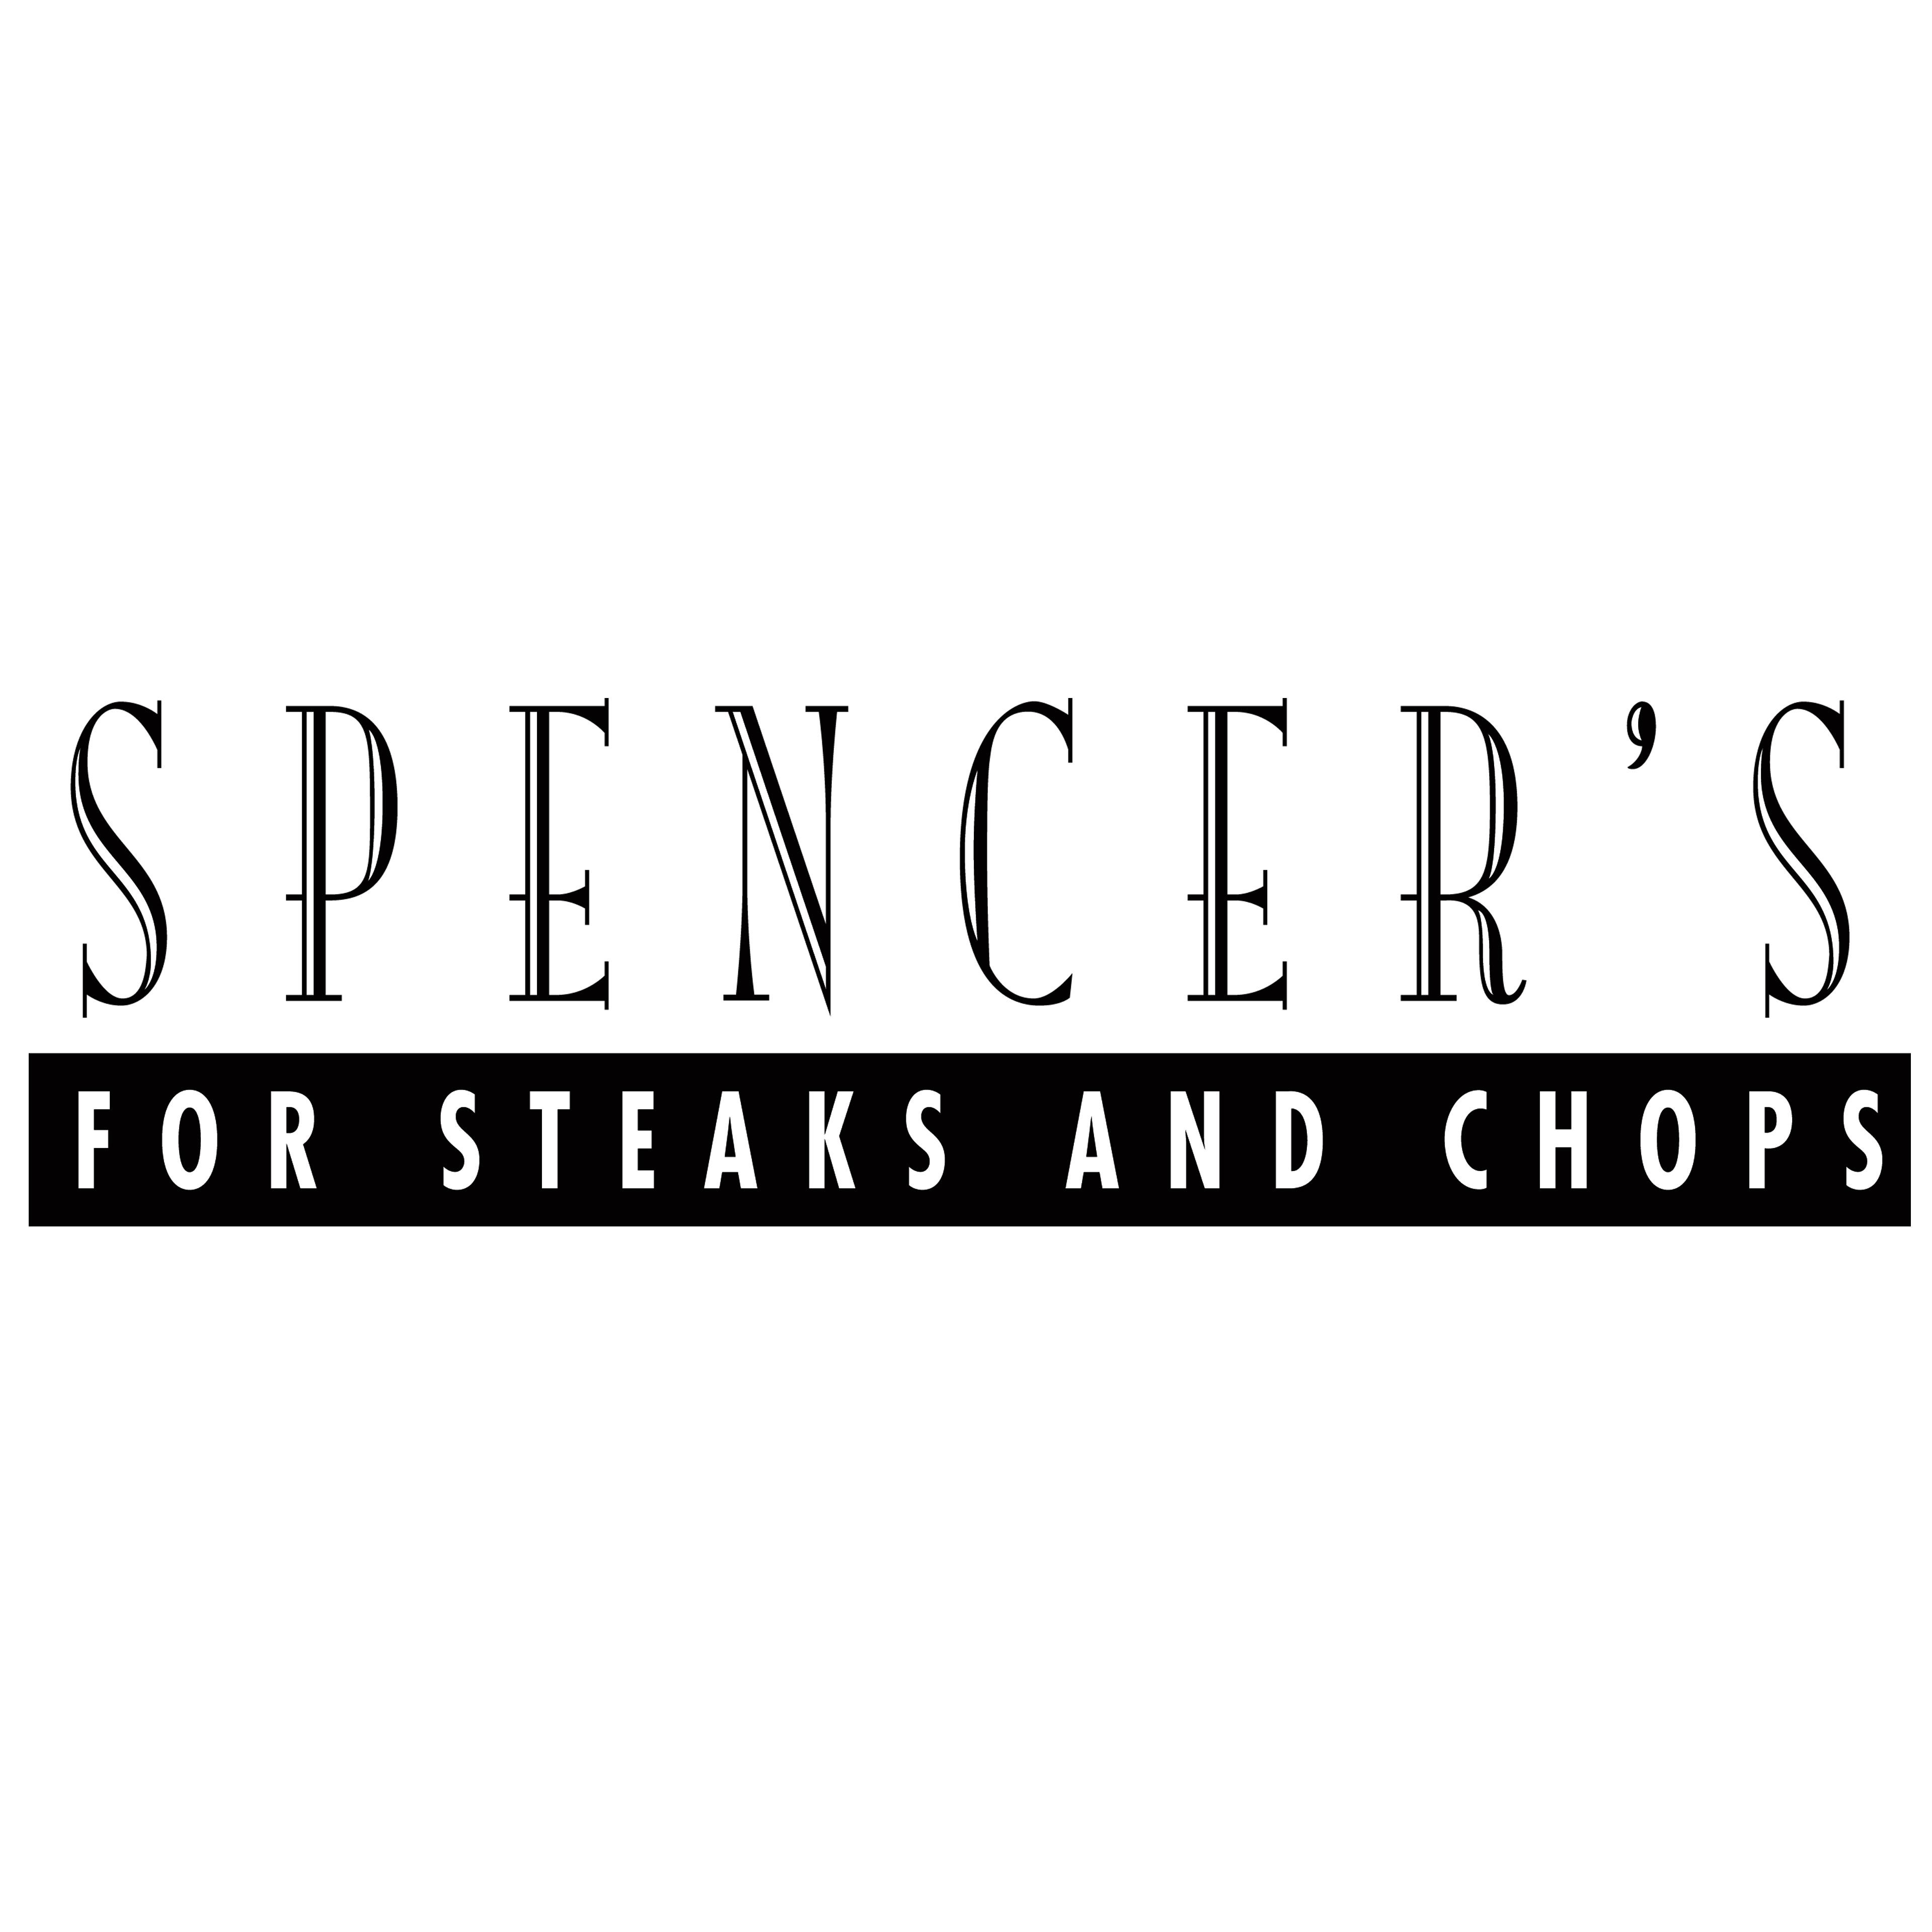 Spencer's For Steaks & Chops - Spokane, WA 99201 - (509)744-2372 | ShowMeLocal.com